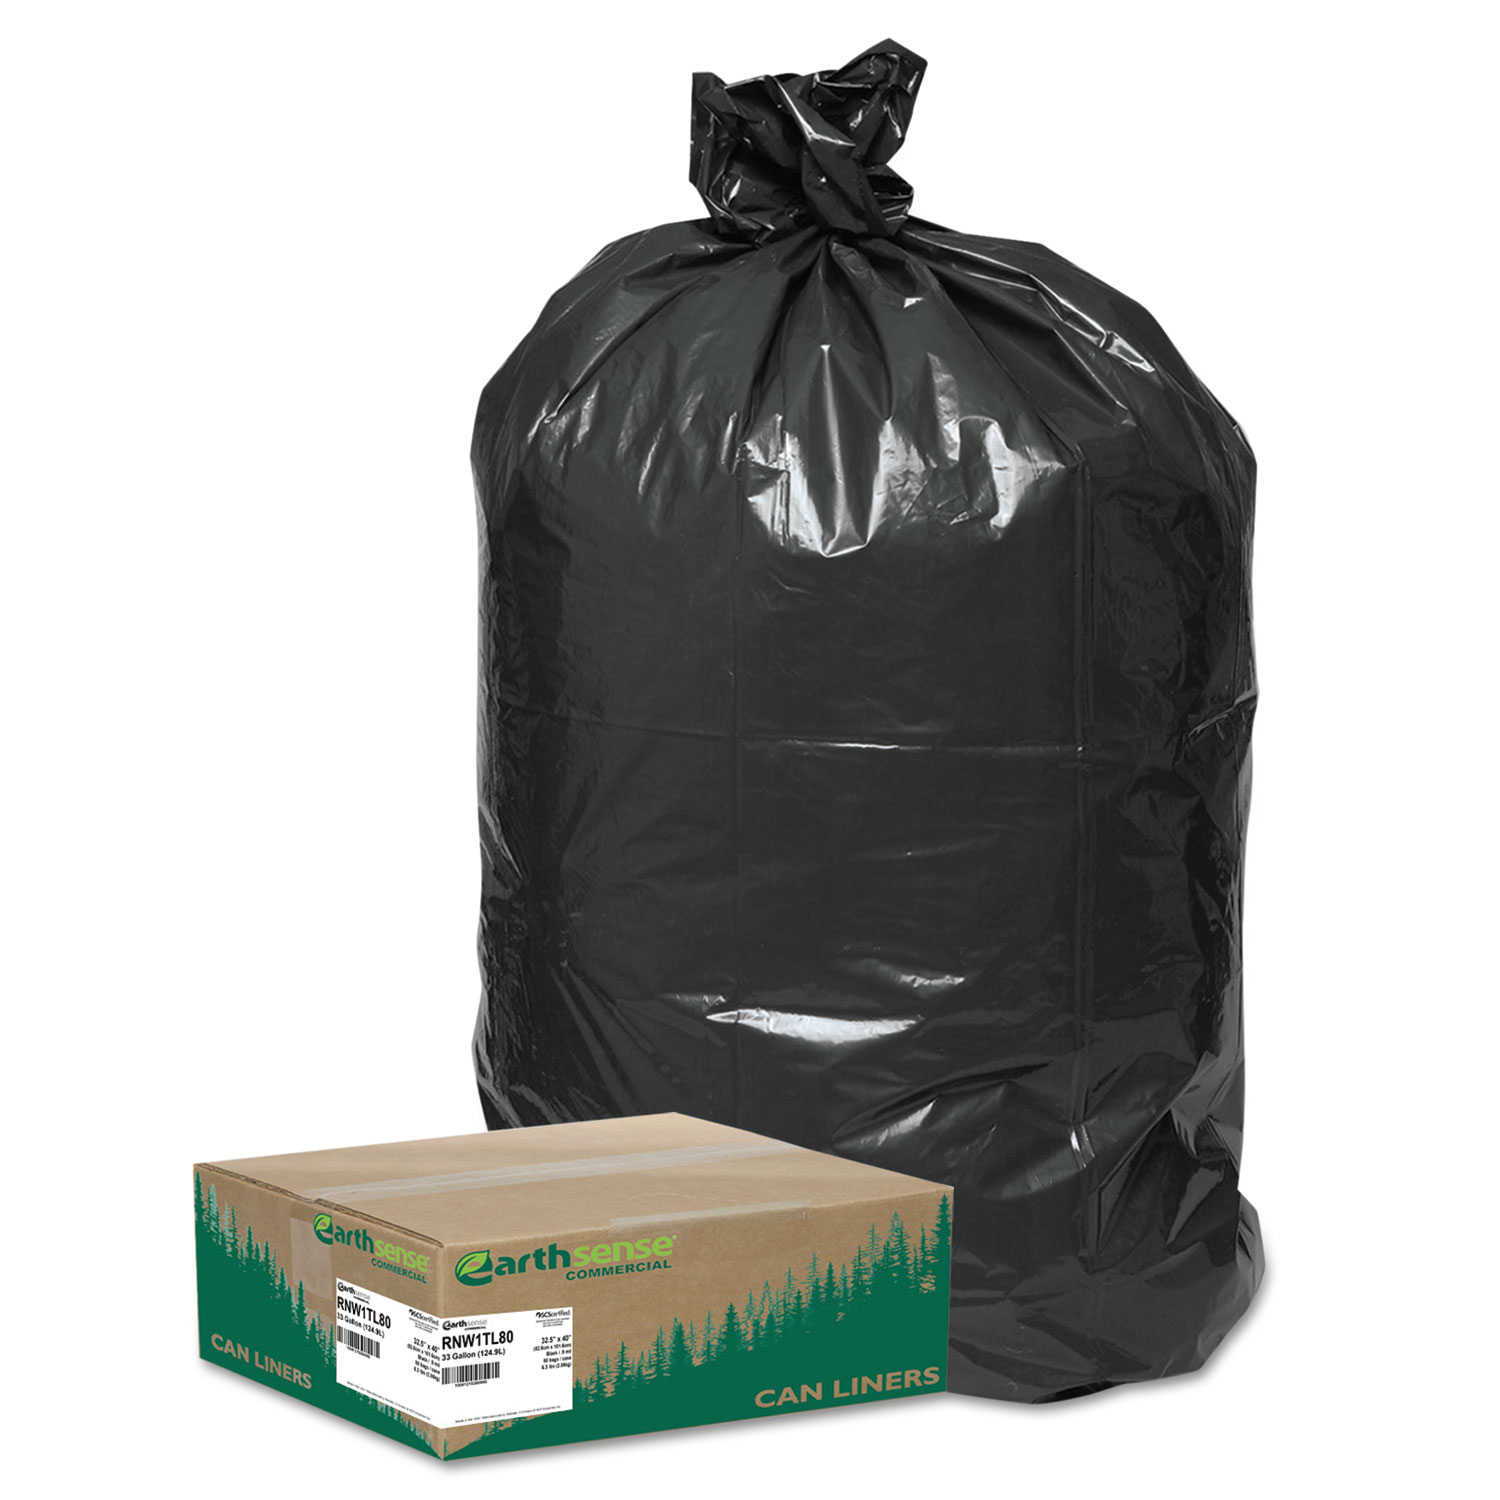  Earthsense Commercial RNW1TL80V Linear Low Density Large Trash and Yard Bags, 33 gal, 0.9 mil, 32.5 x 40, Black, 80/Carton (WBIRNW1TL80) 